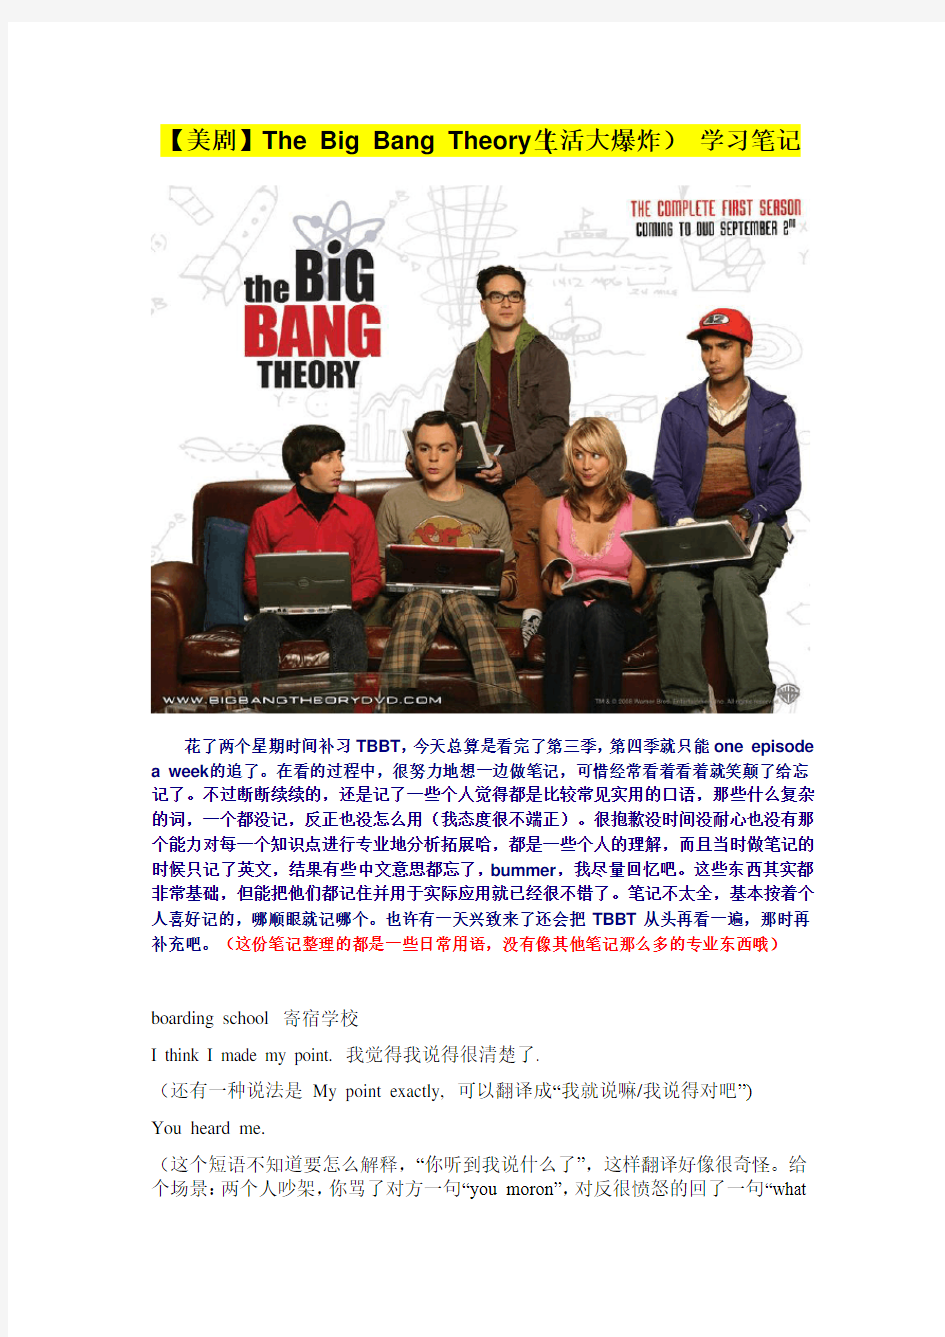 【美剧】The Big Bang Theory (生活大爆炸) 学习笔记